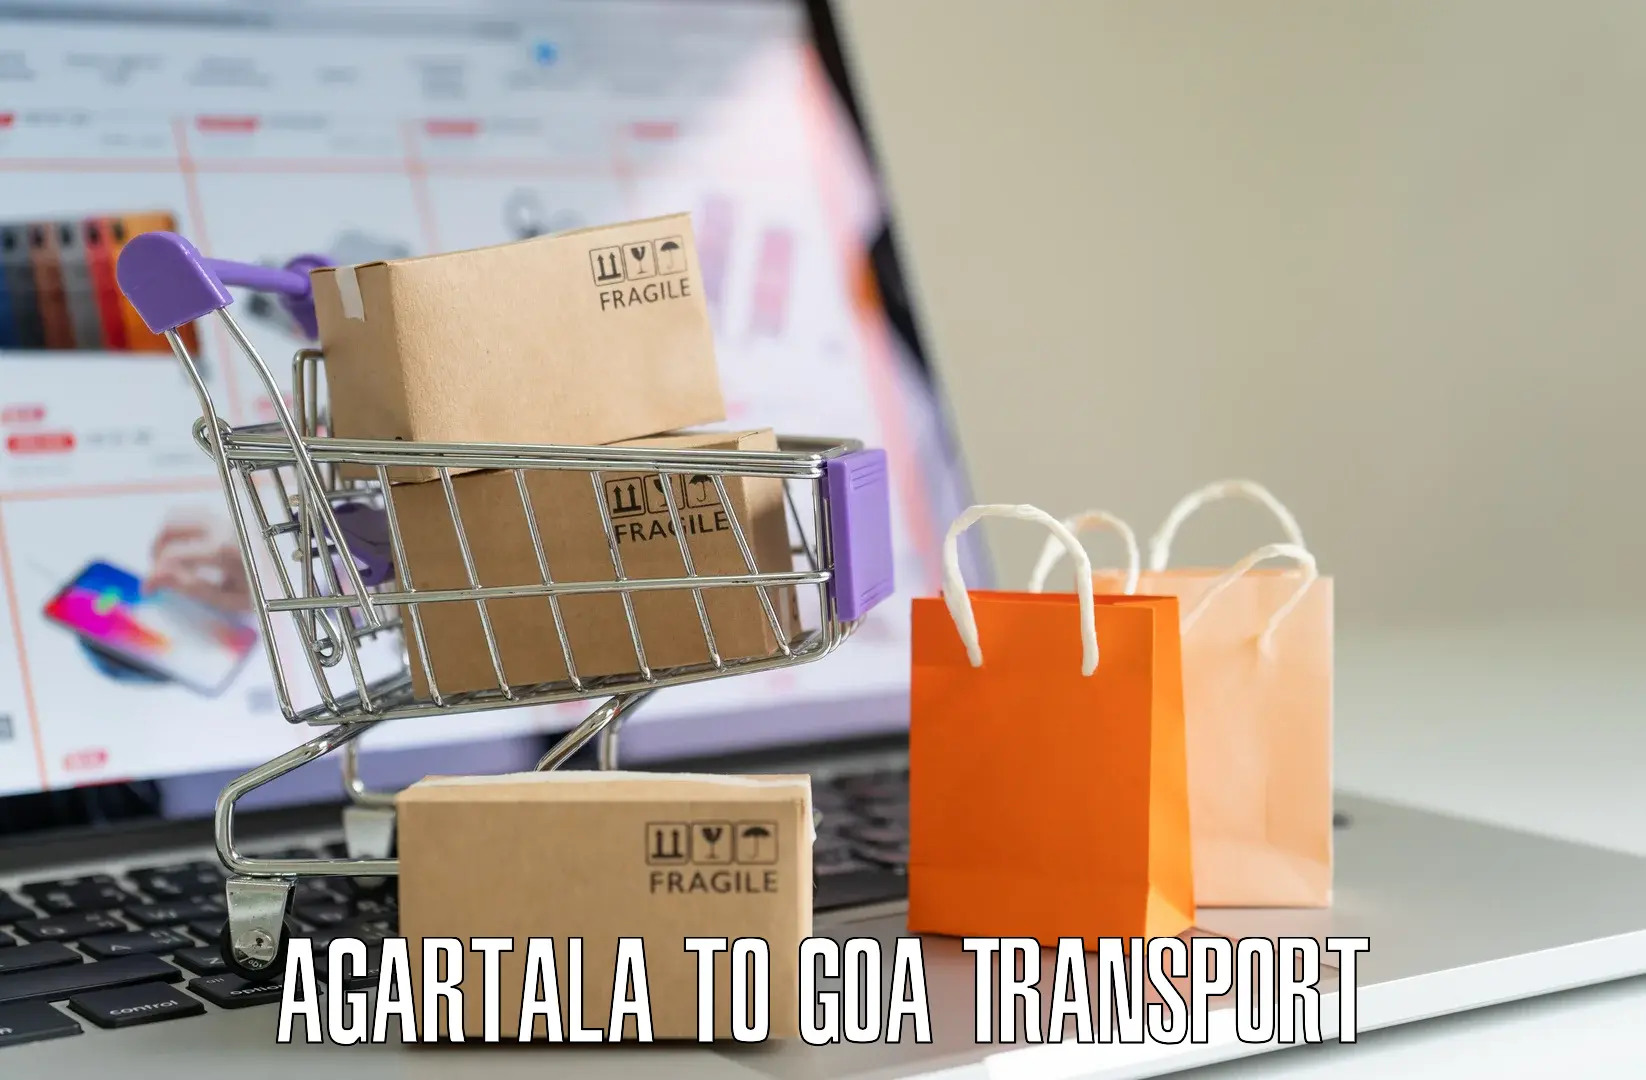 Online transport service Agartala to Goa